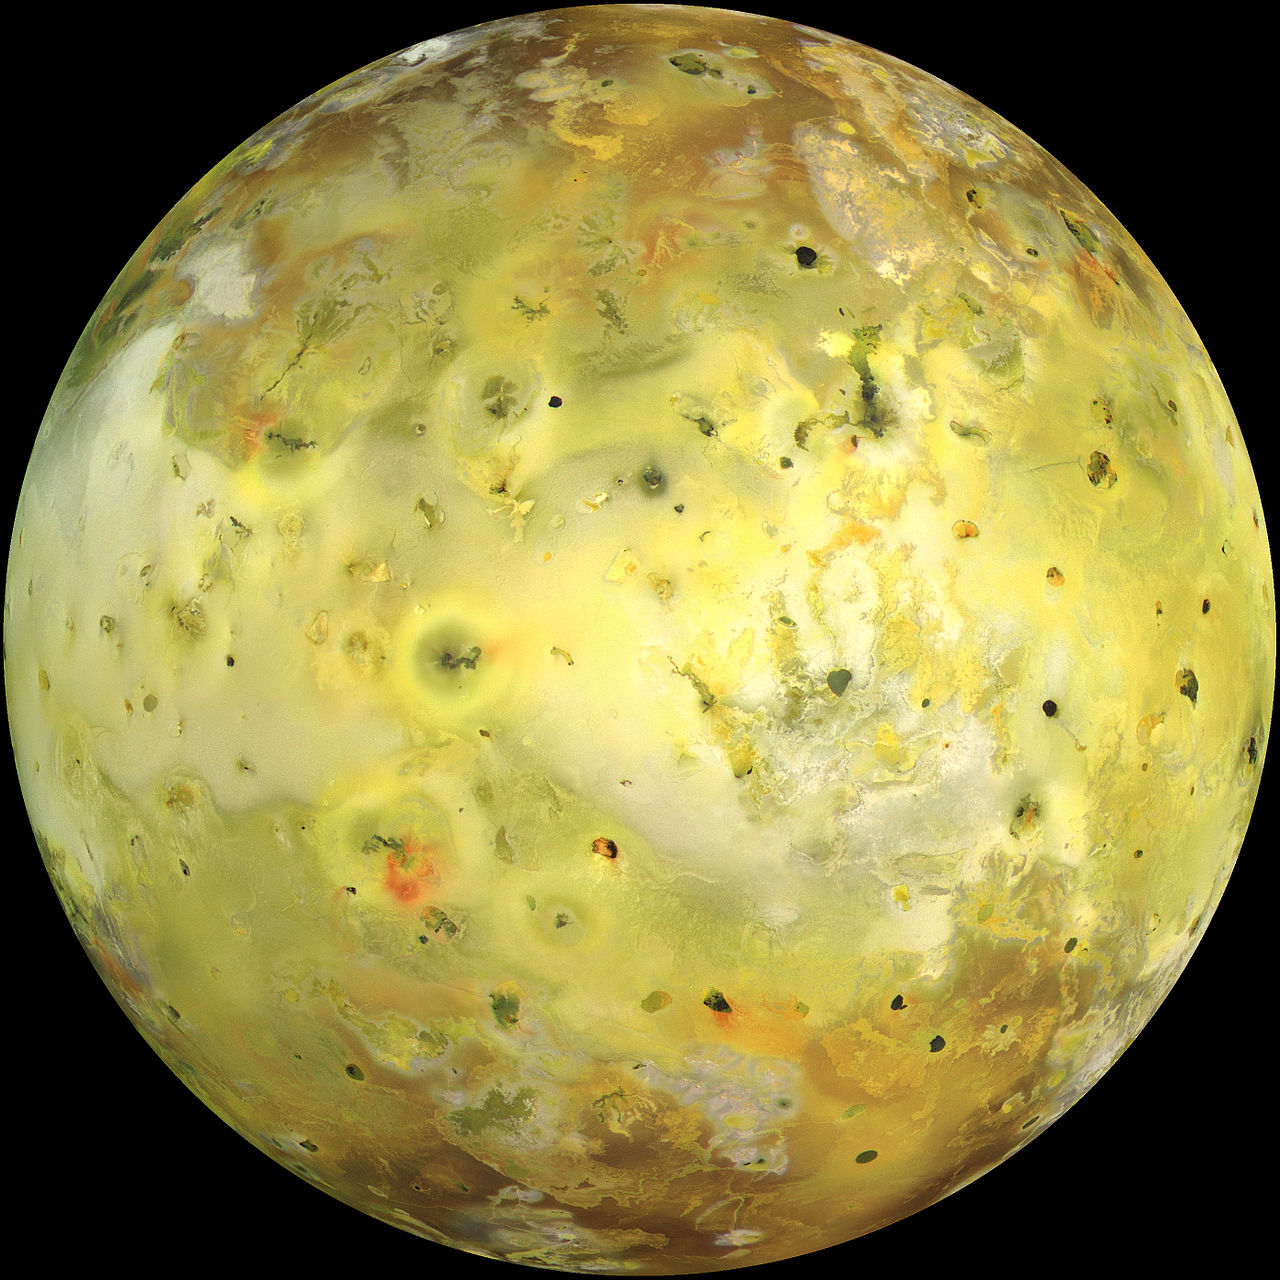 Image of Jupiter’s Satellite, Io.